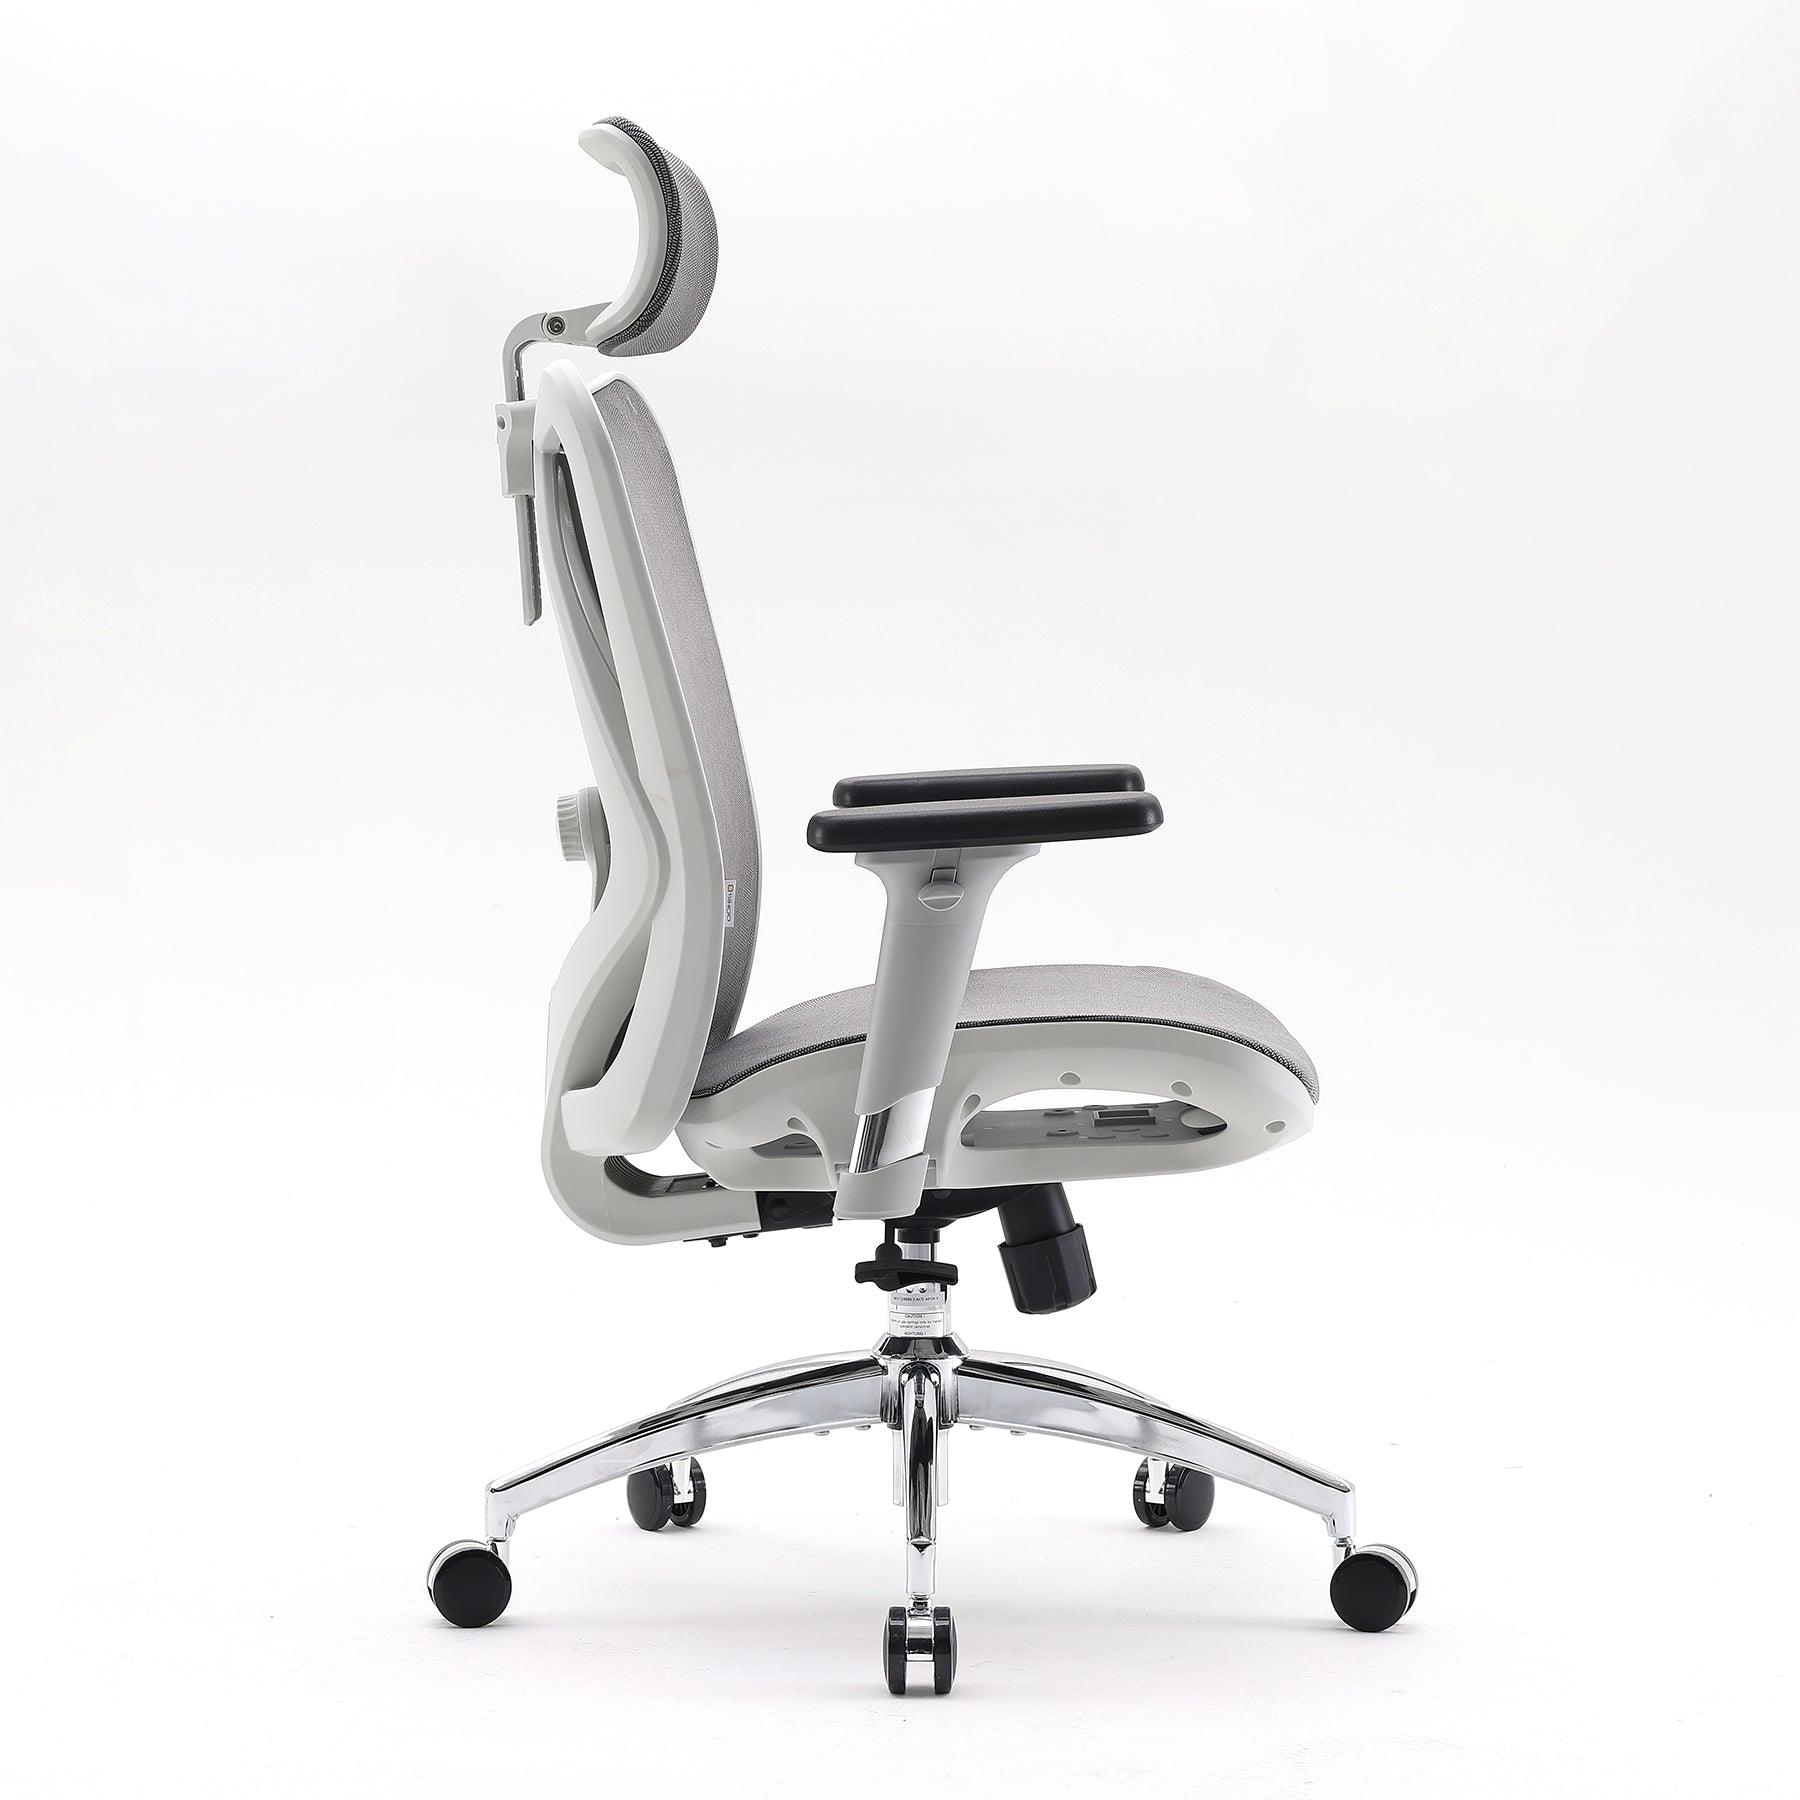 Spotlight on the SIHOO M57 office chair - ergonomic excellence